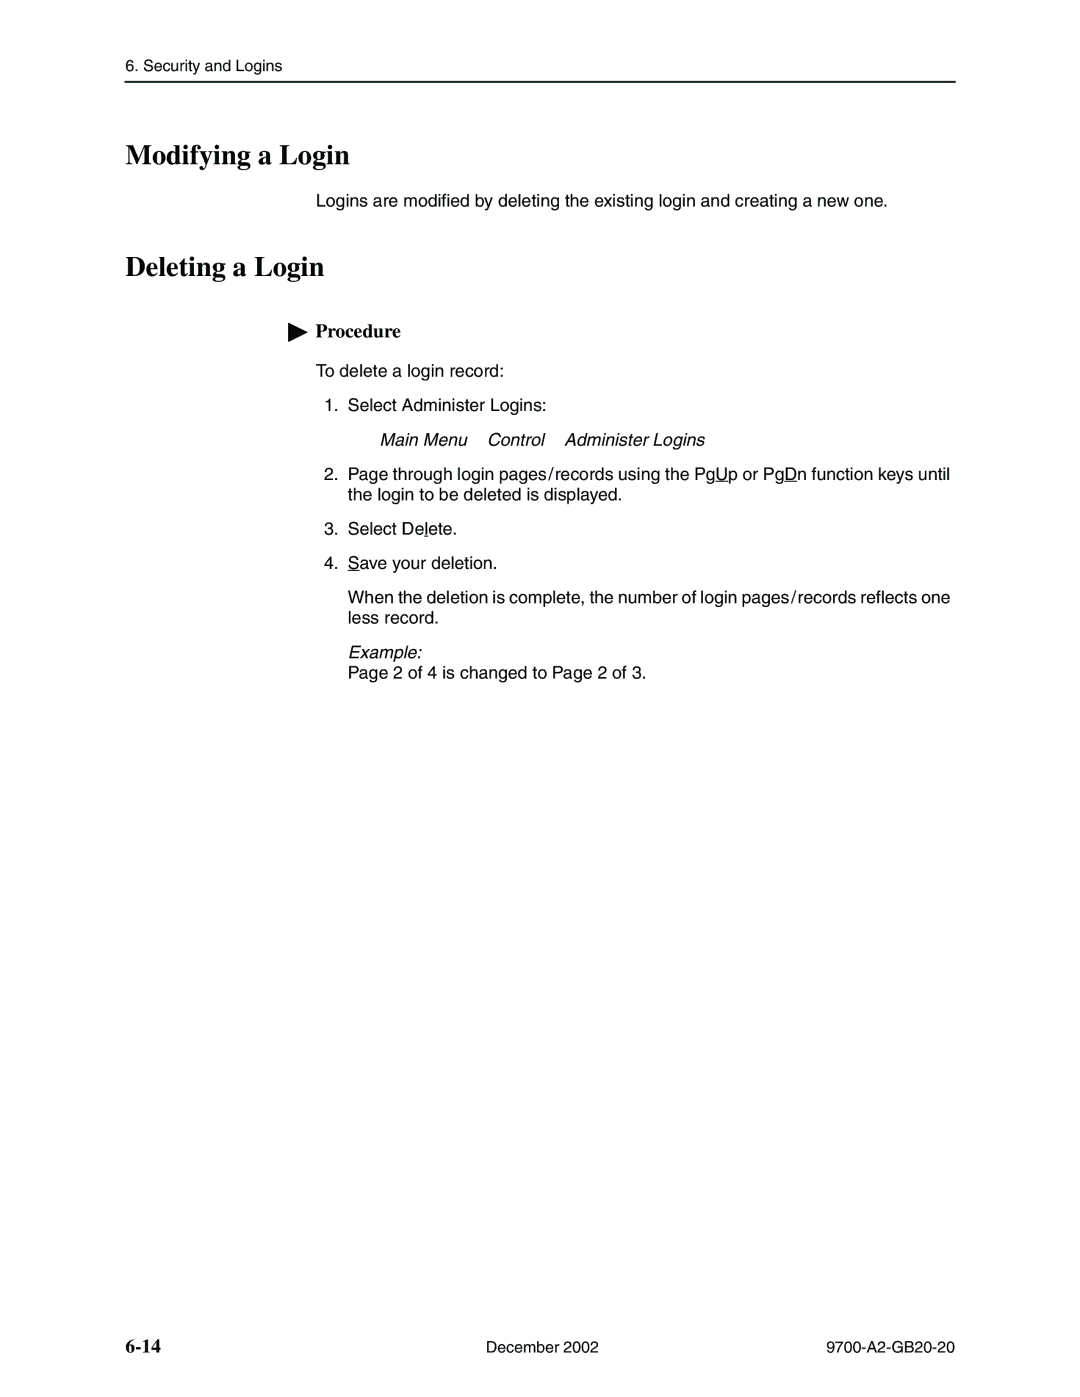 Paradyne 9788, 9720 manual Modifying a Login, Deleting a Login, Example 